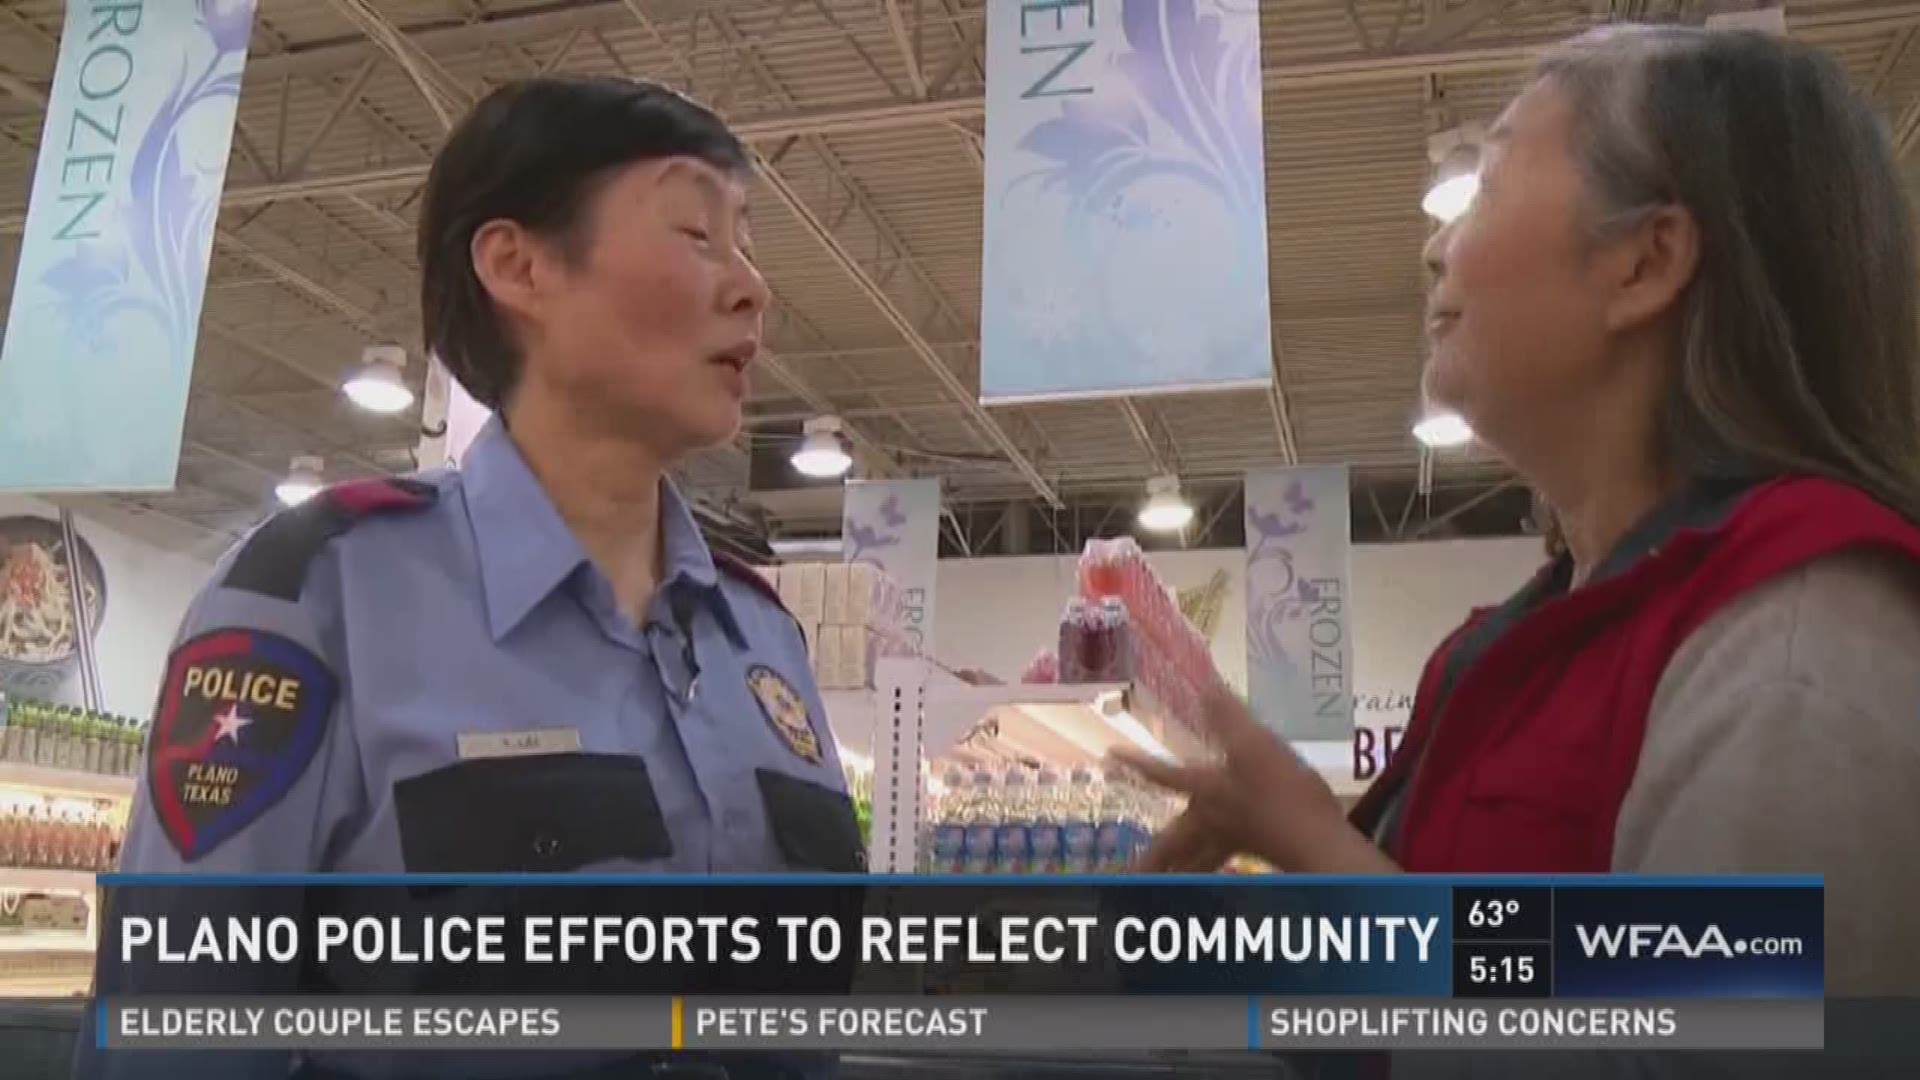 Plano police efforts to reflect community